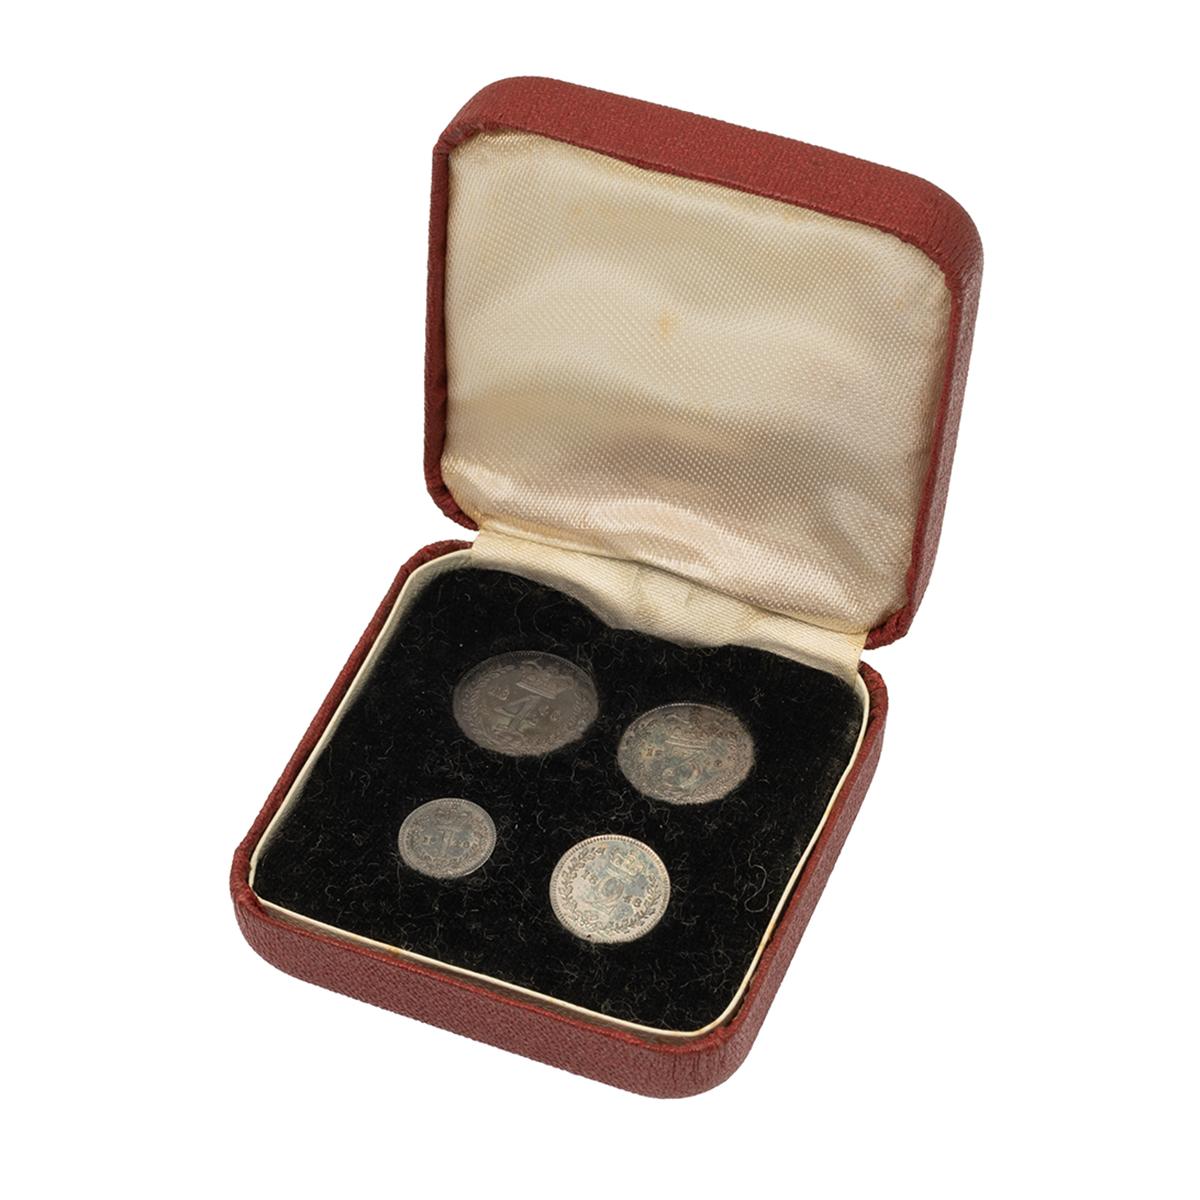 1848 rare Queen Victoria Young Head Maundy Money four-coin silver set in box (ESC 2458). Includes...